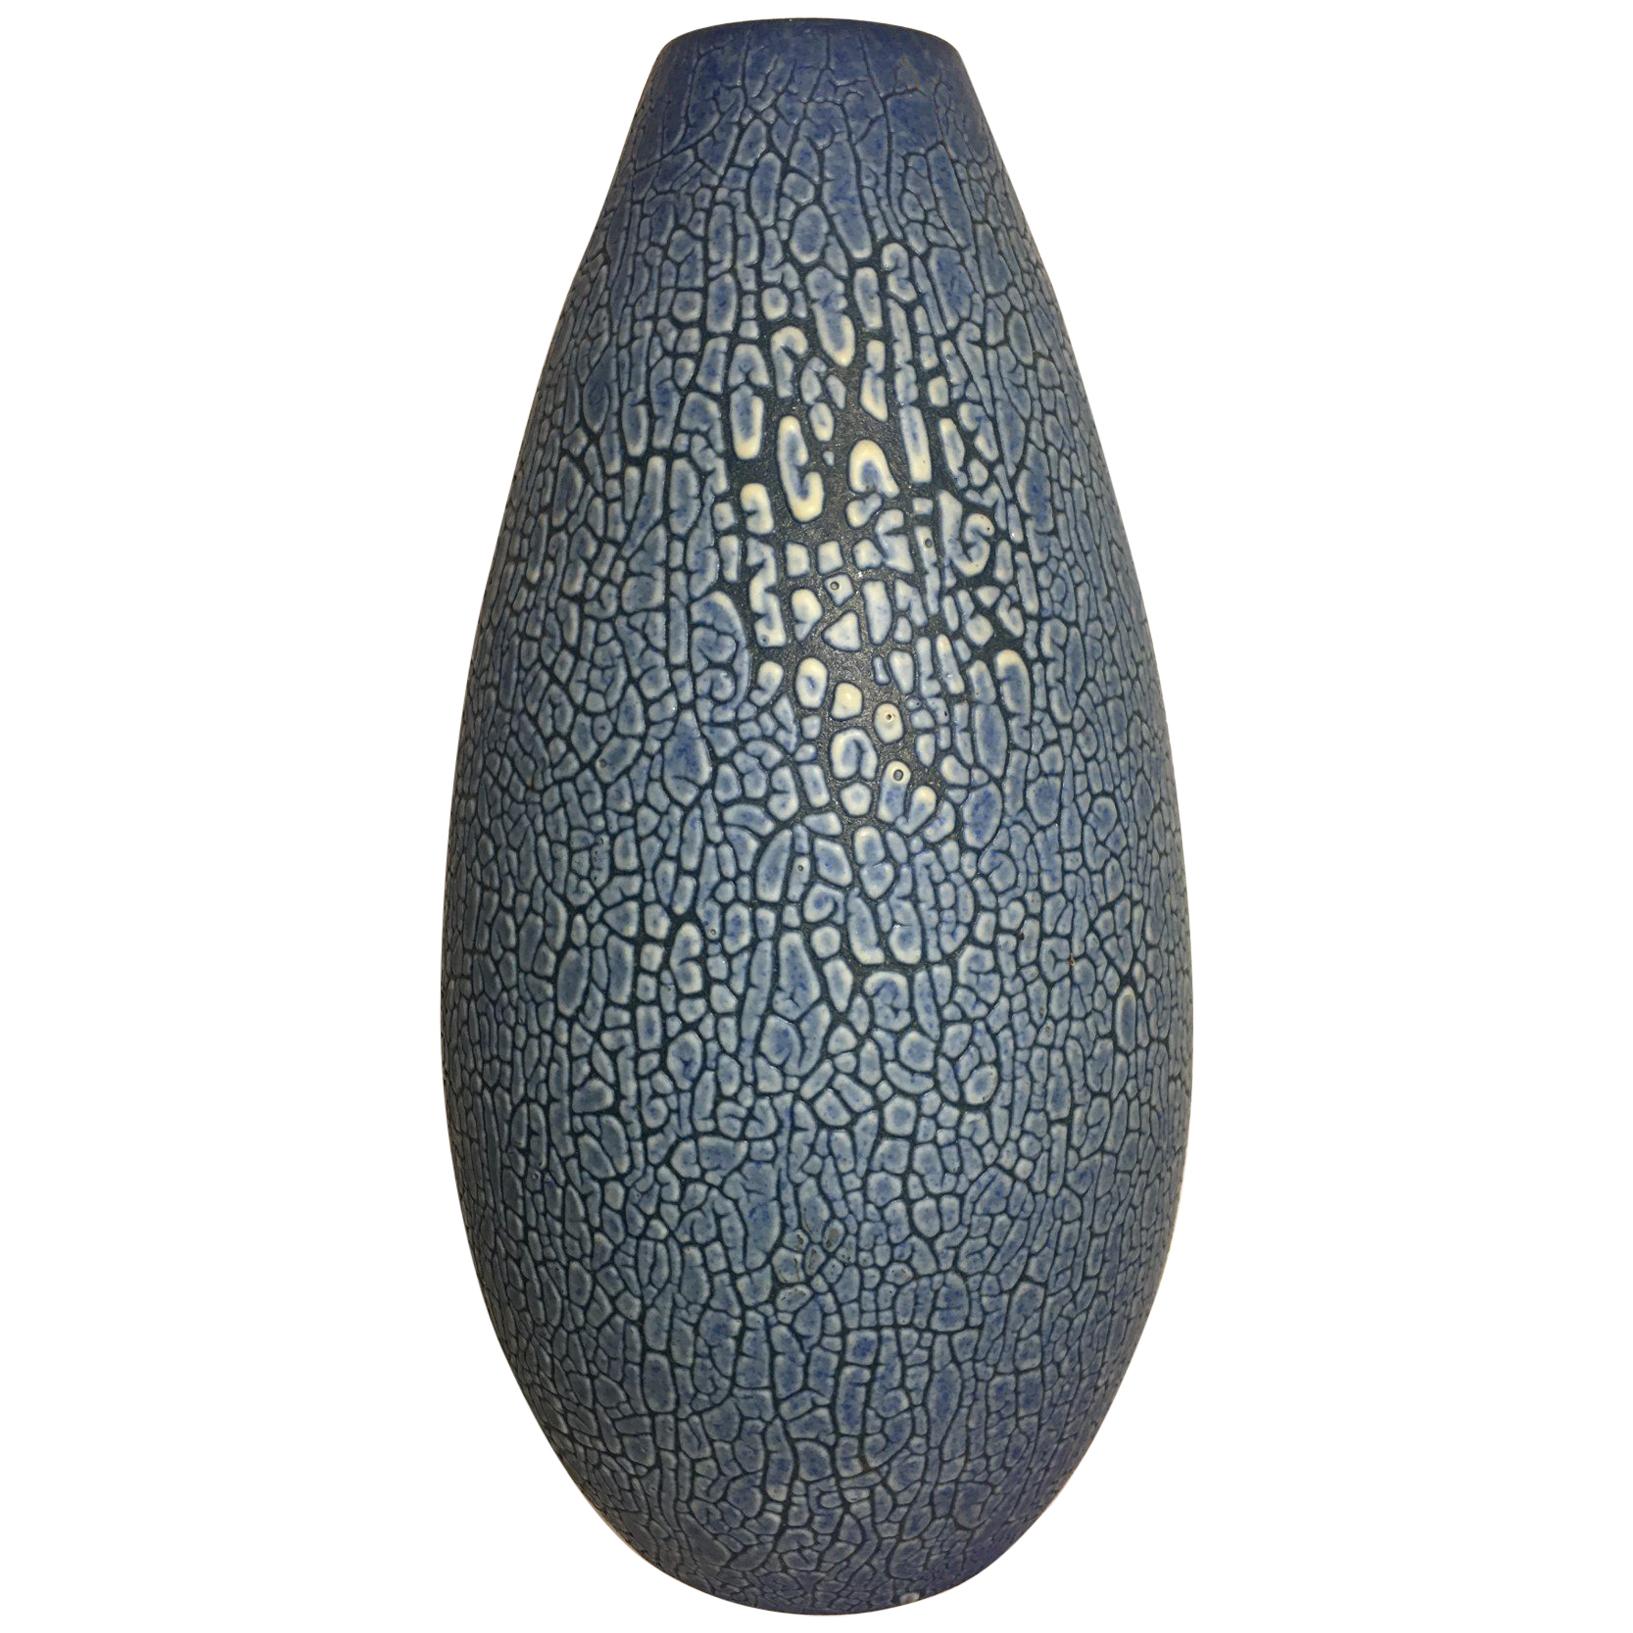 Reptile Skin Look Ceramic Vase from 1950s Germany For Sale